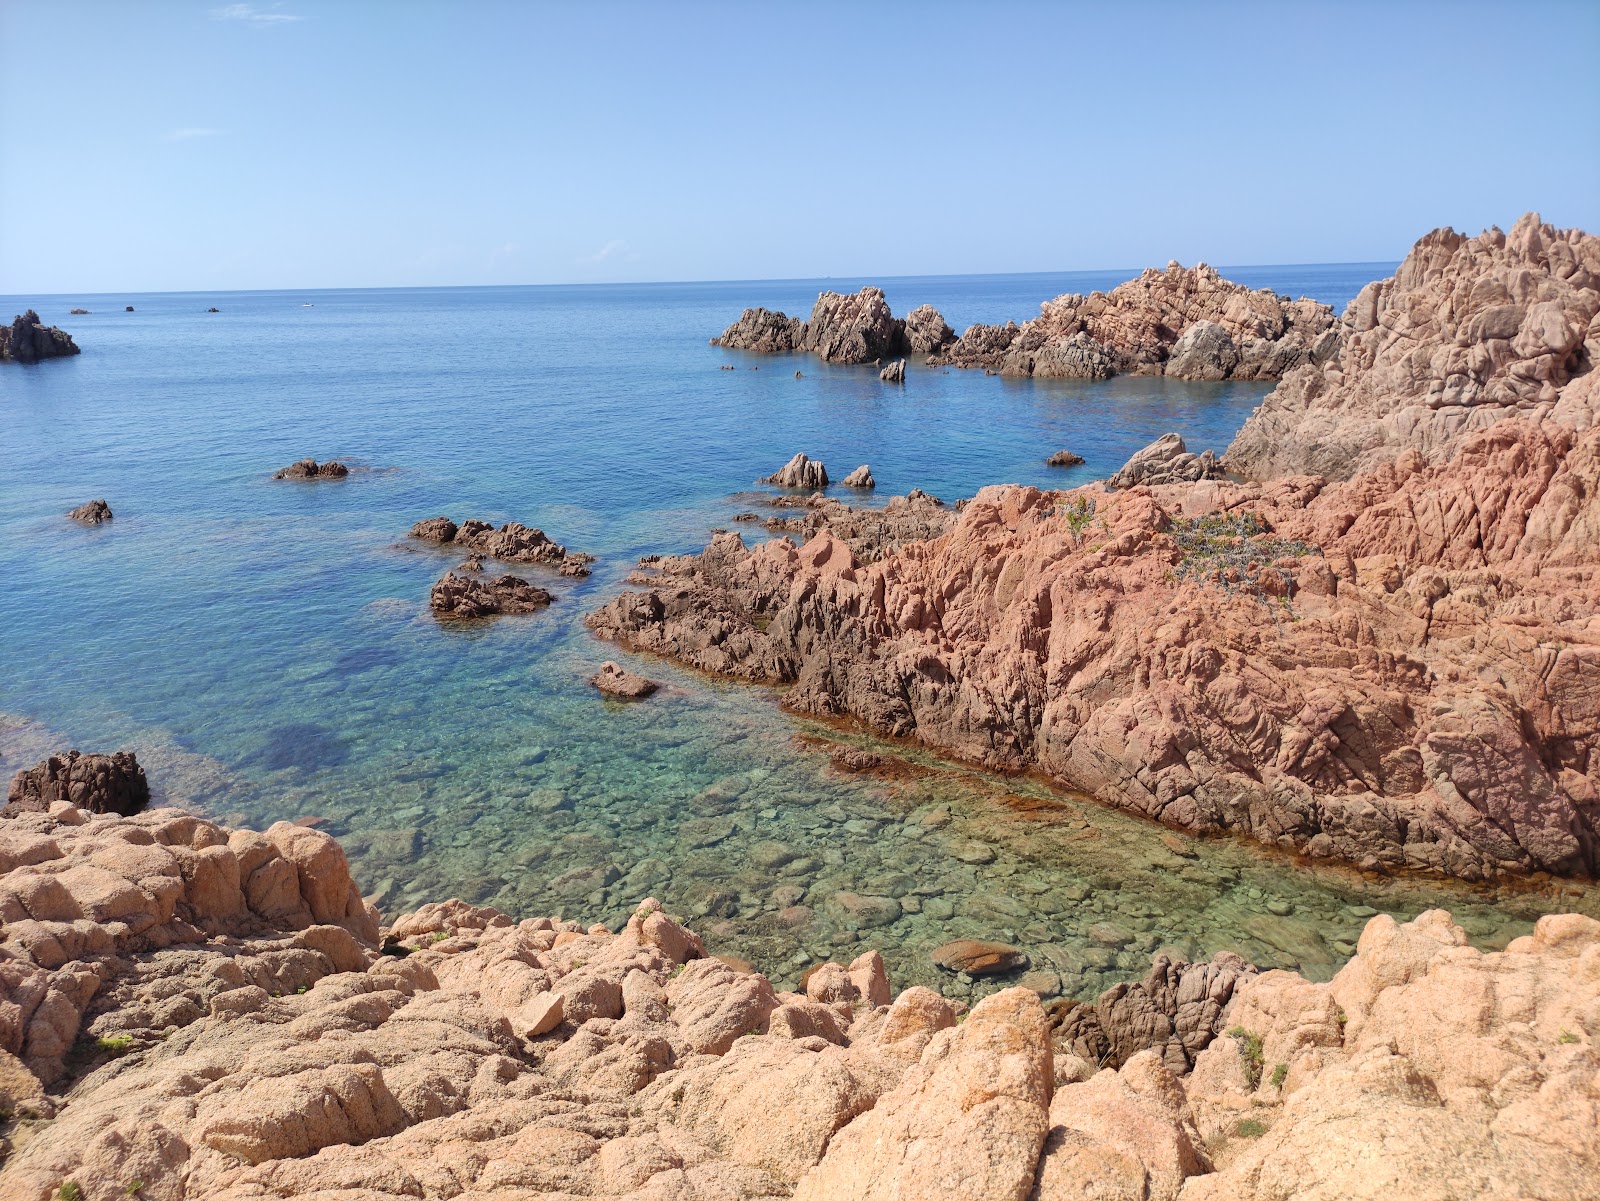 Photo of Spiaggia de La Sorgente with rocks cover surface